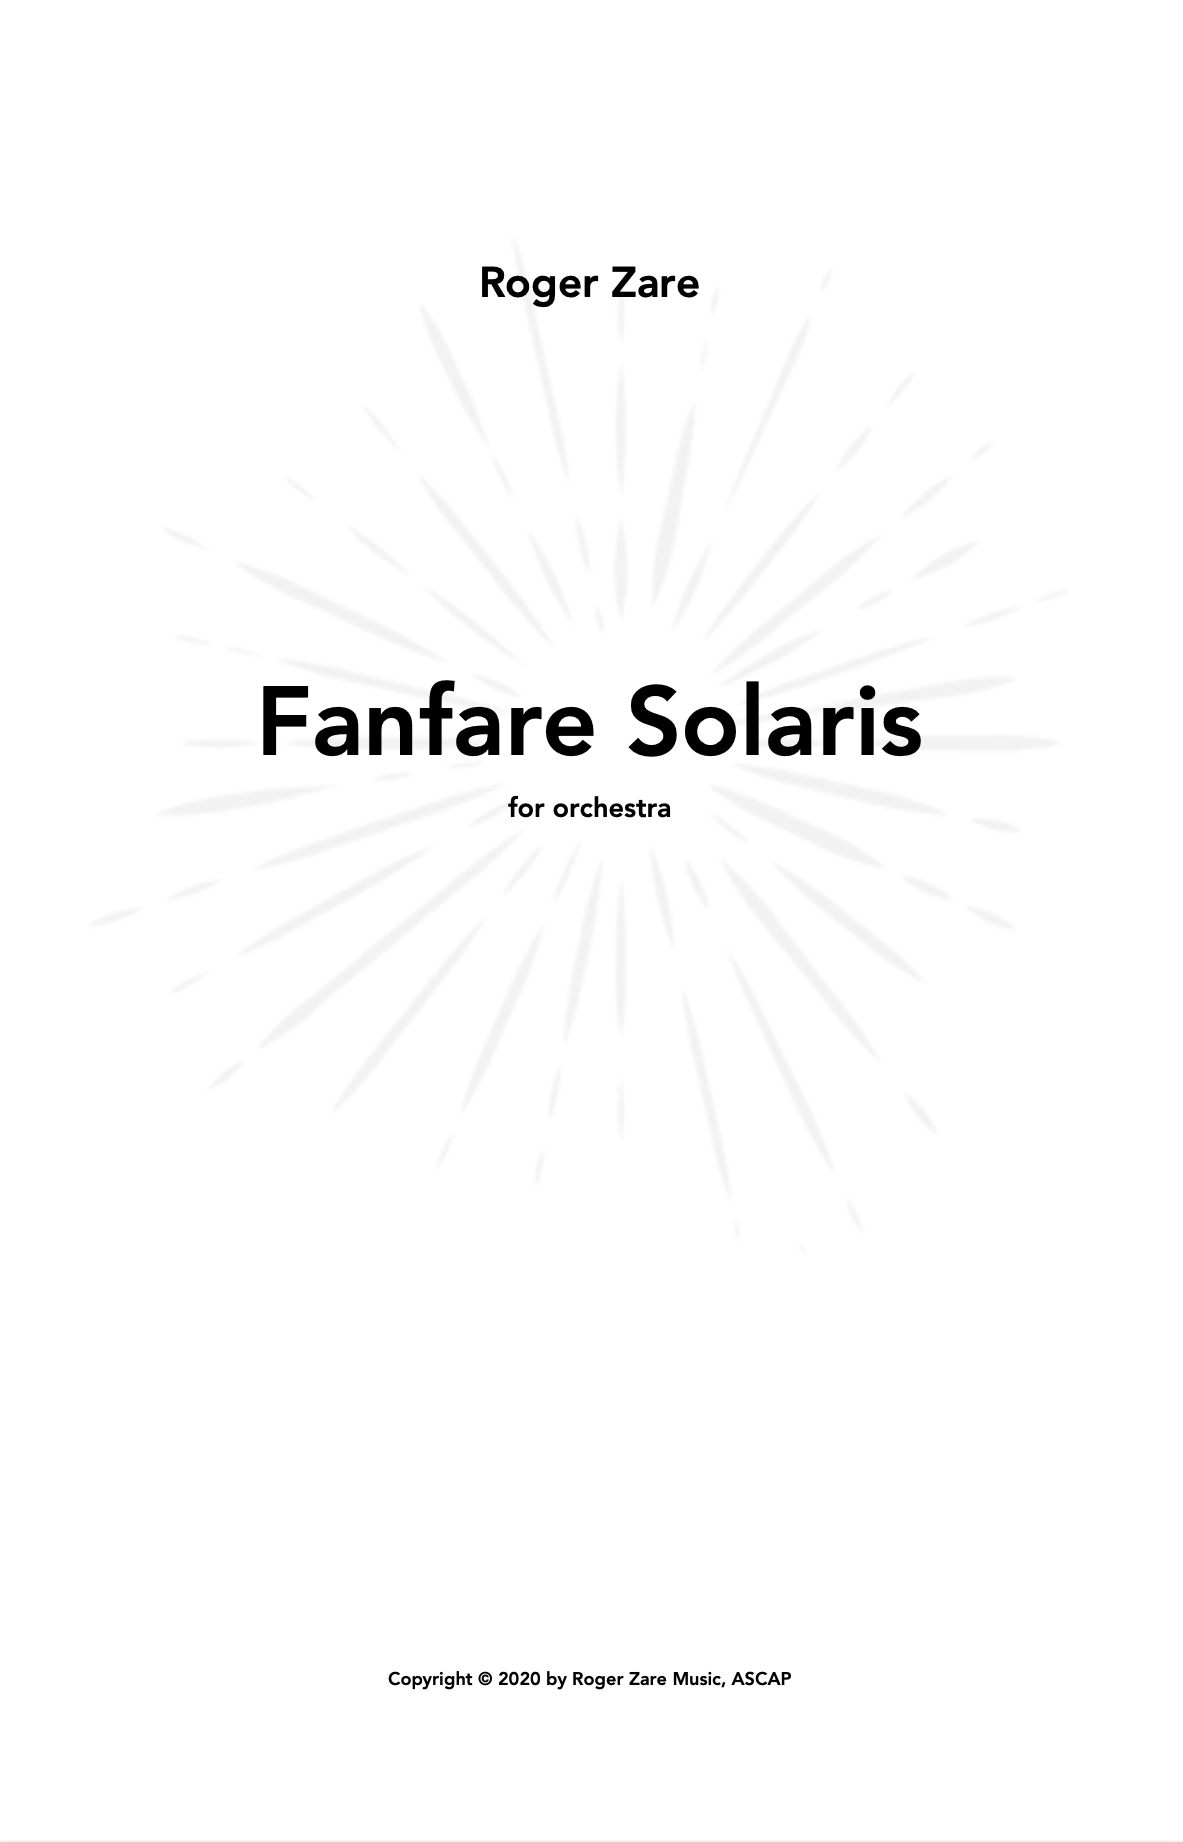 Fanfare Solaris  by Roger Zare